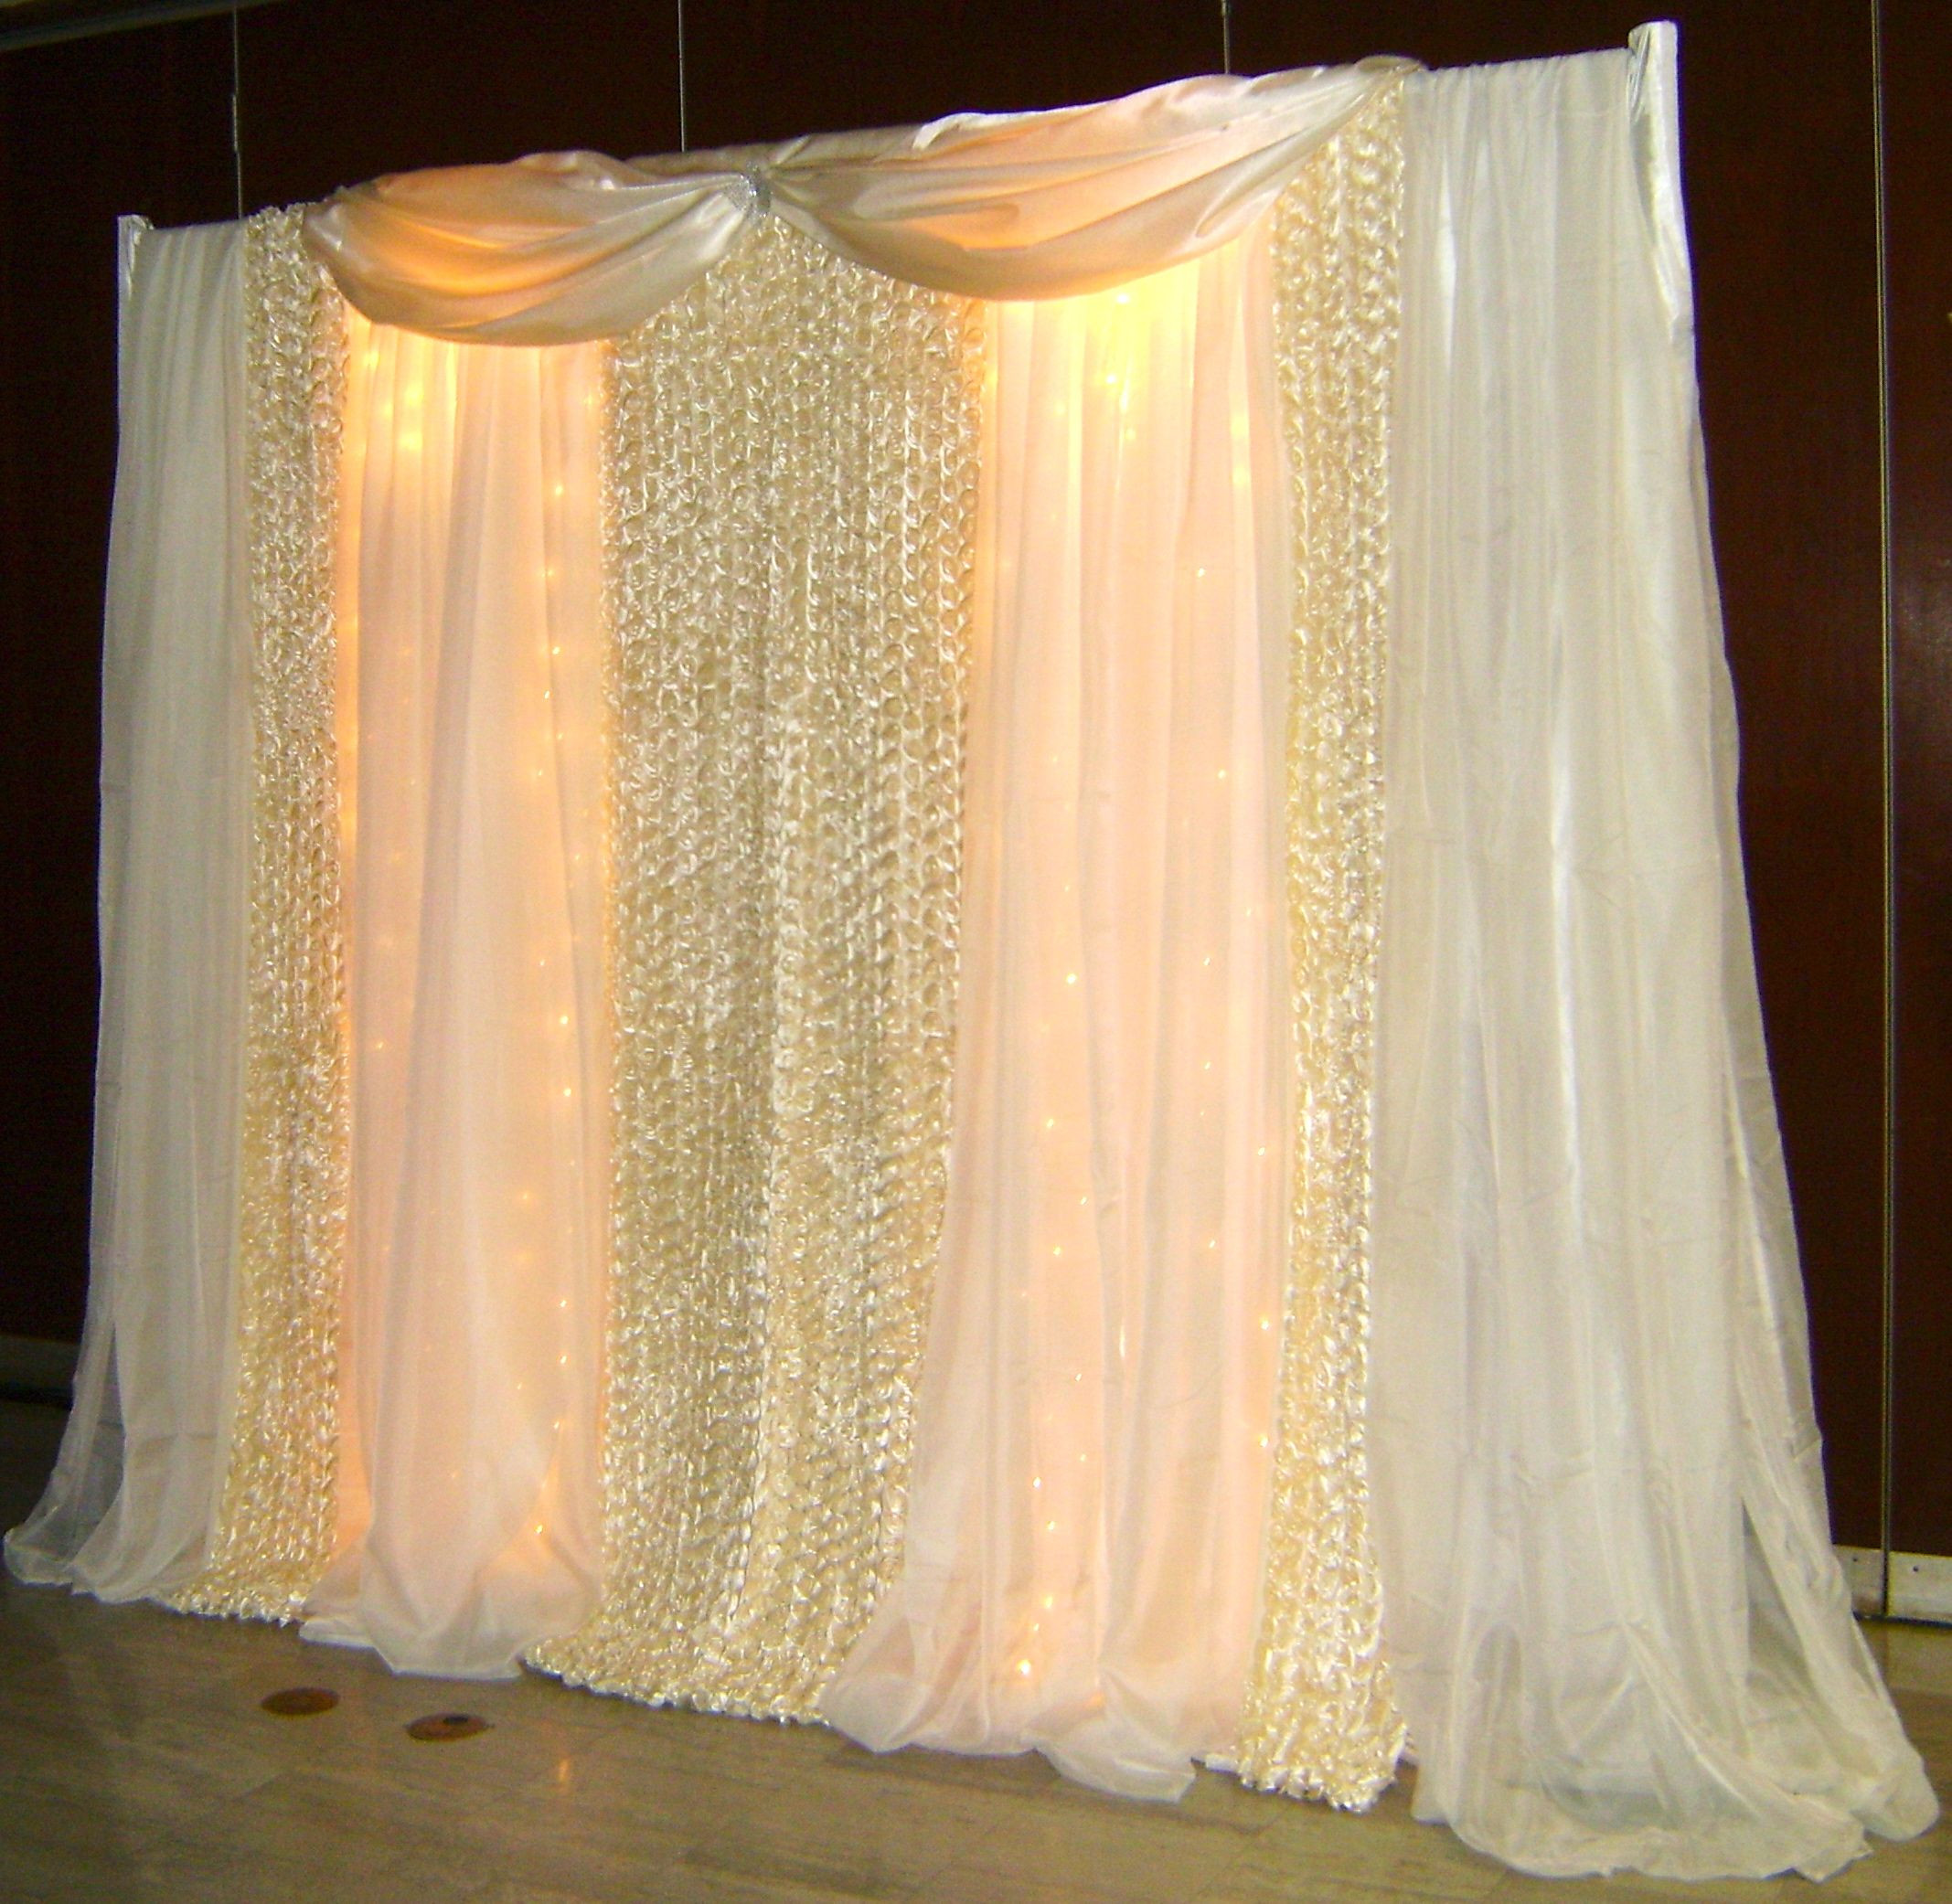 DIY Backdrops For Wedding
 DIY Wedding Backdrops Ideas